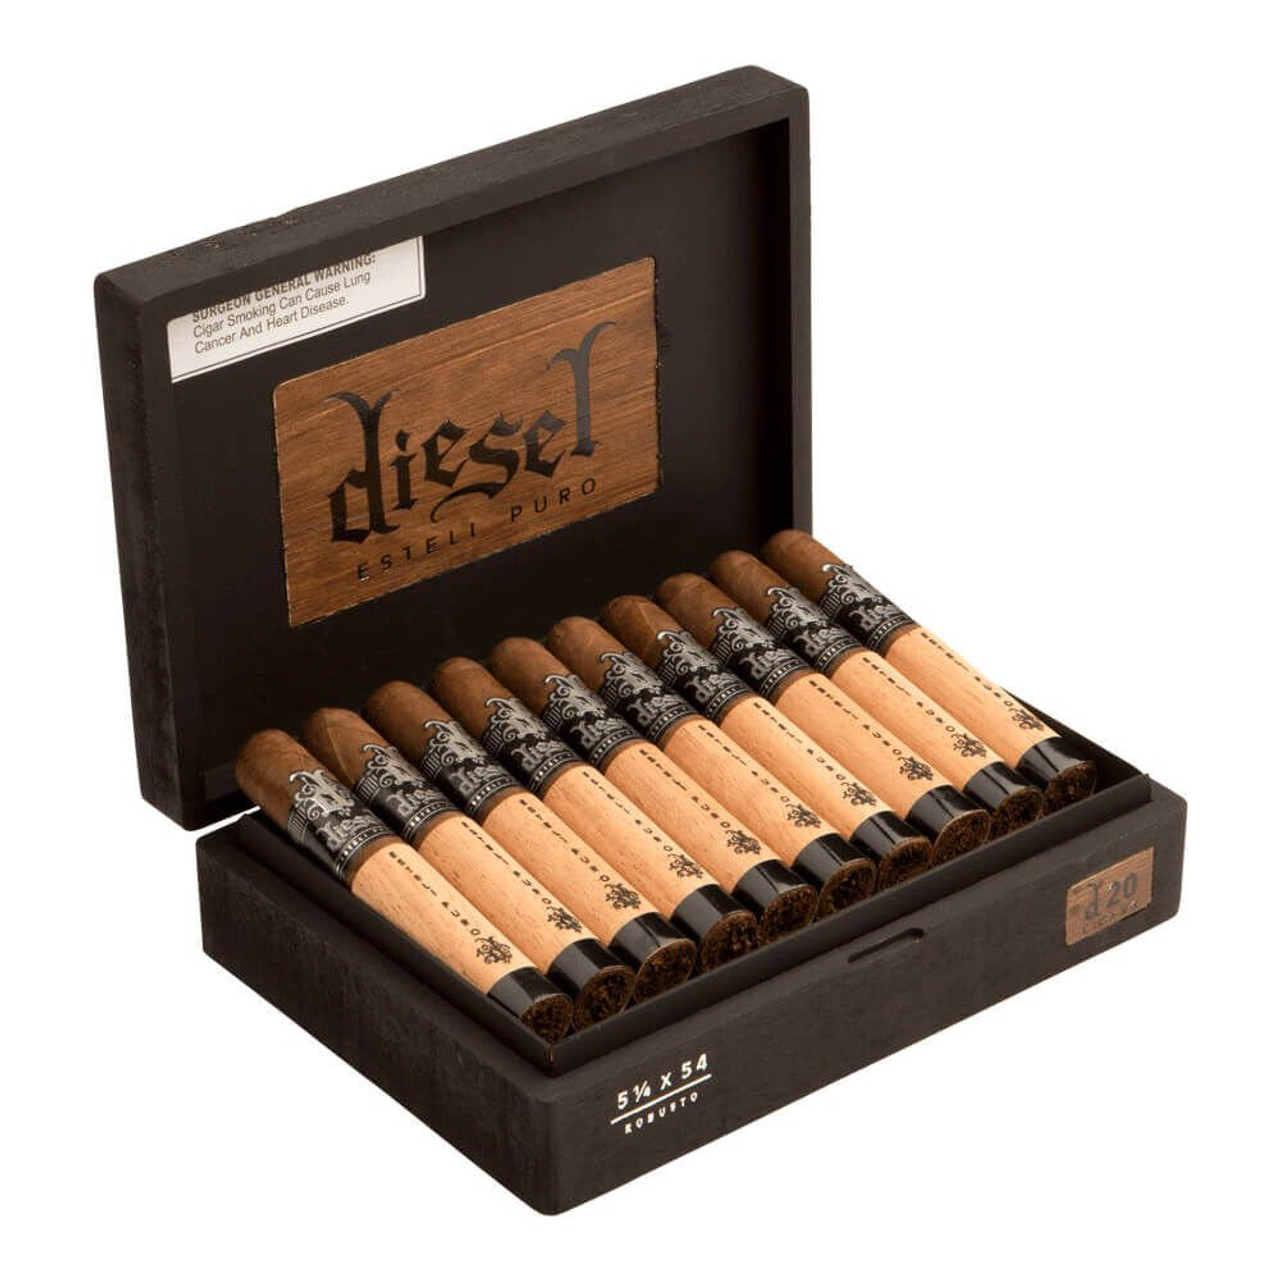 Diesel Esteli Puro Robusto Cigars - 5.25 x 54 (Box of 20)